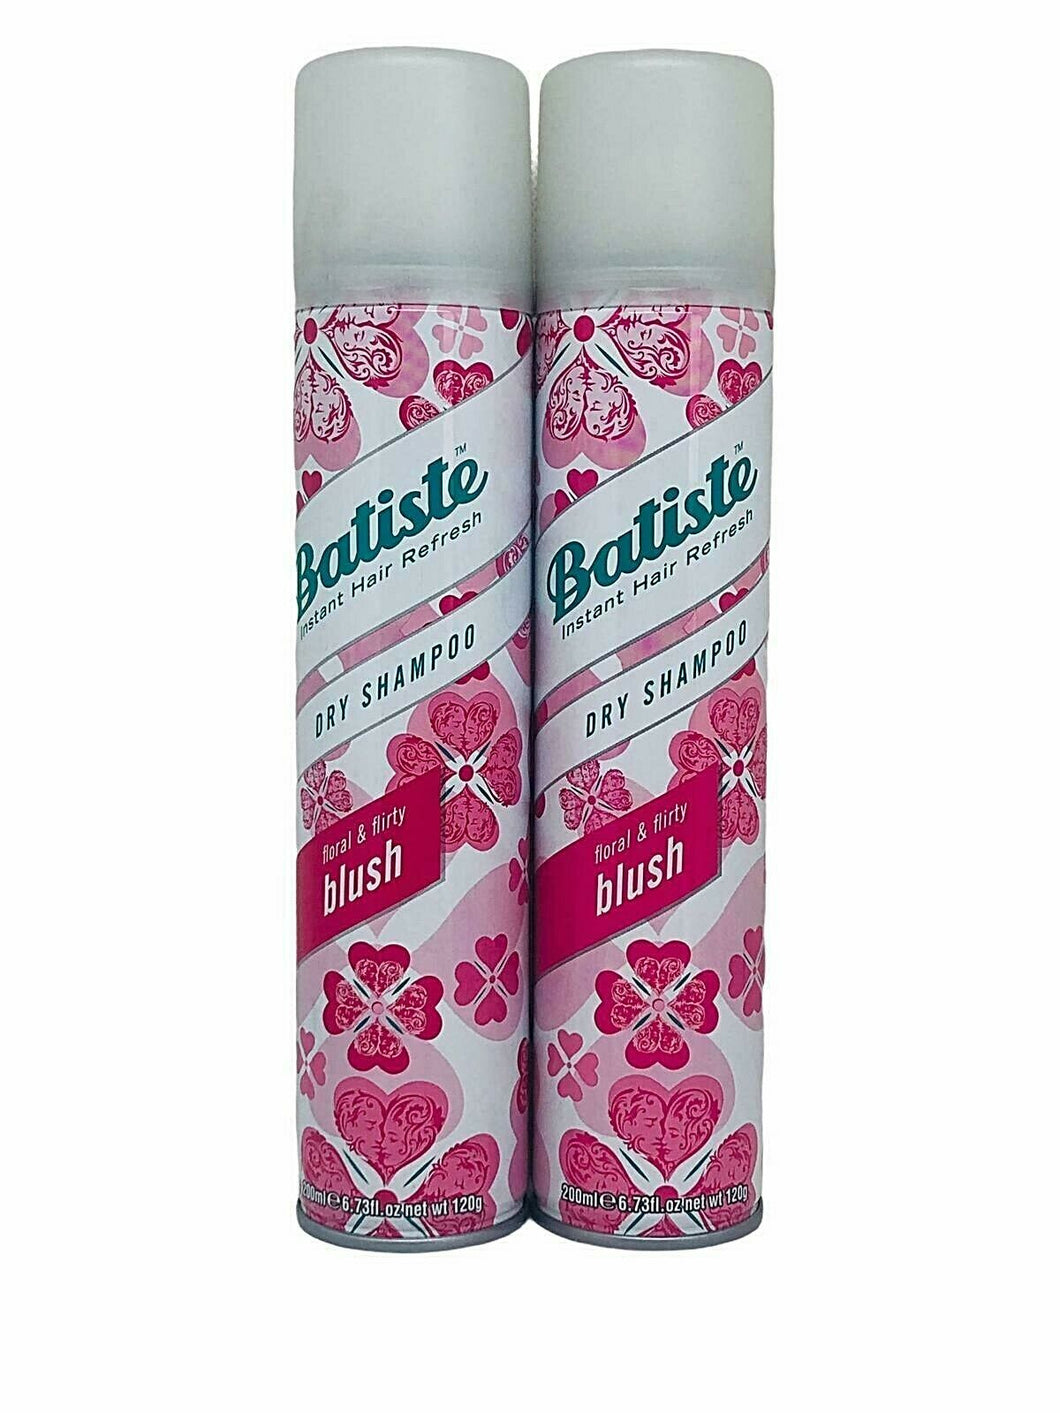 Batiste Blush Floral & Flirty Trockenshampoo 2x 200ml.